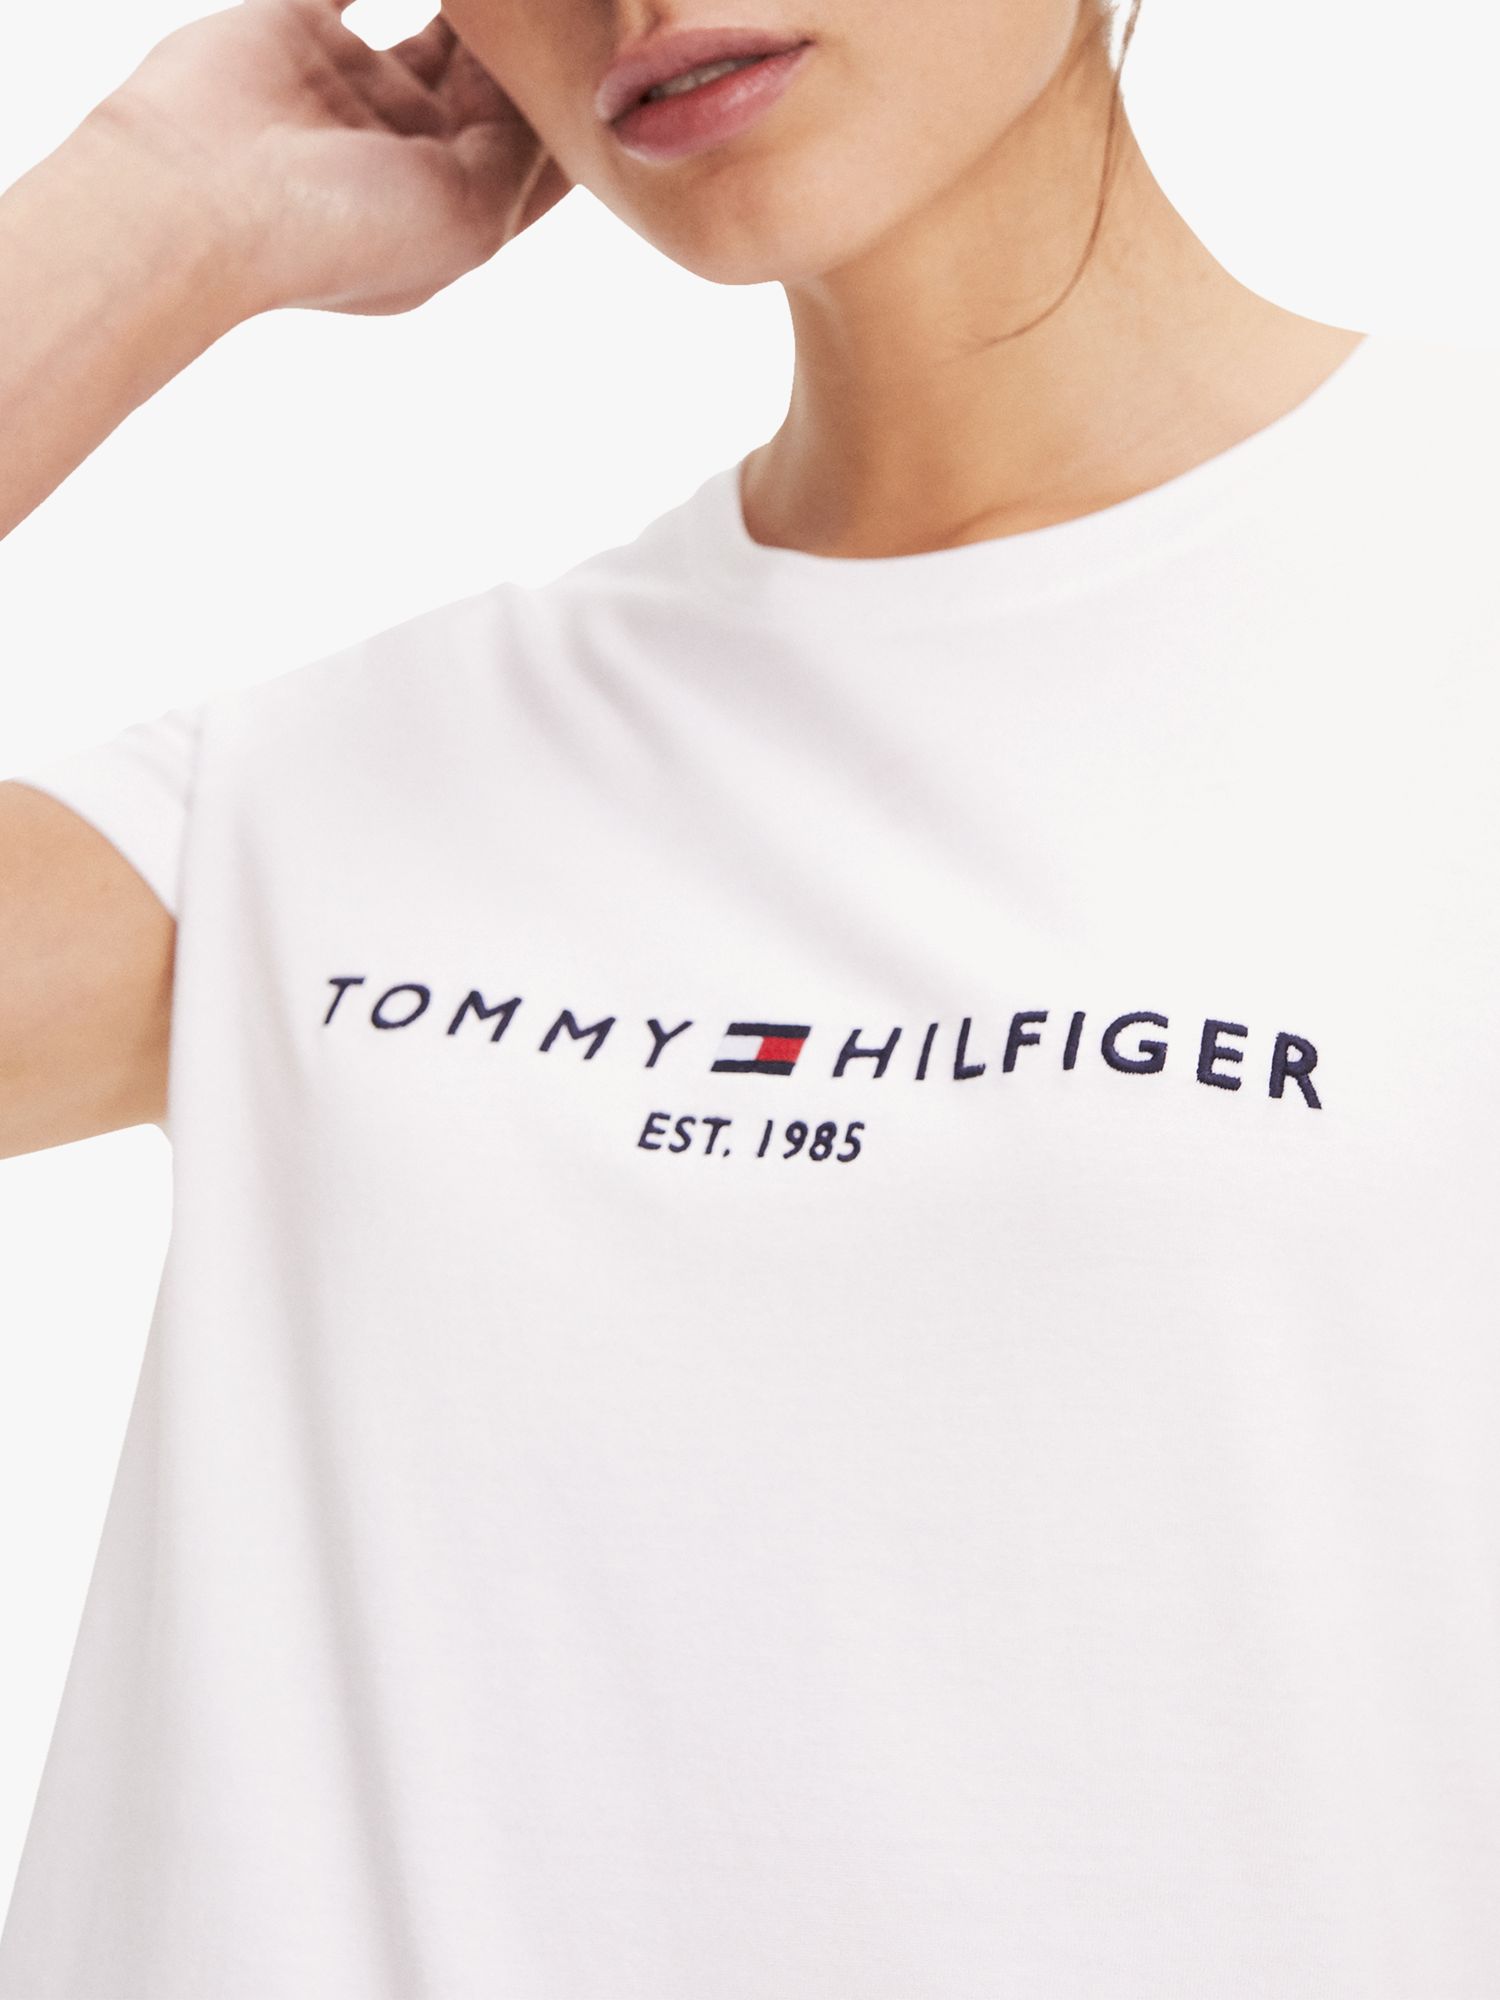 tommy hilfiger embroidered logo t shirt